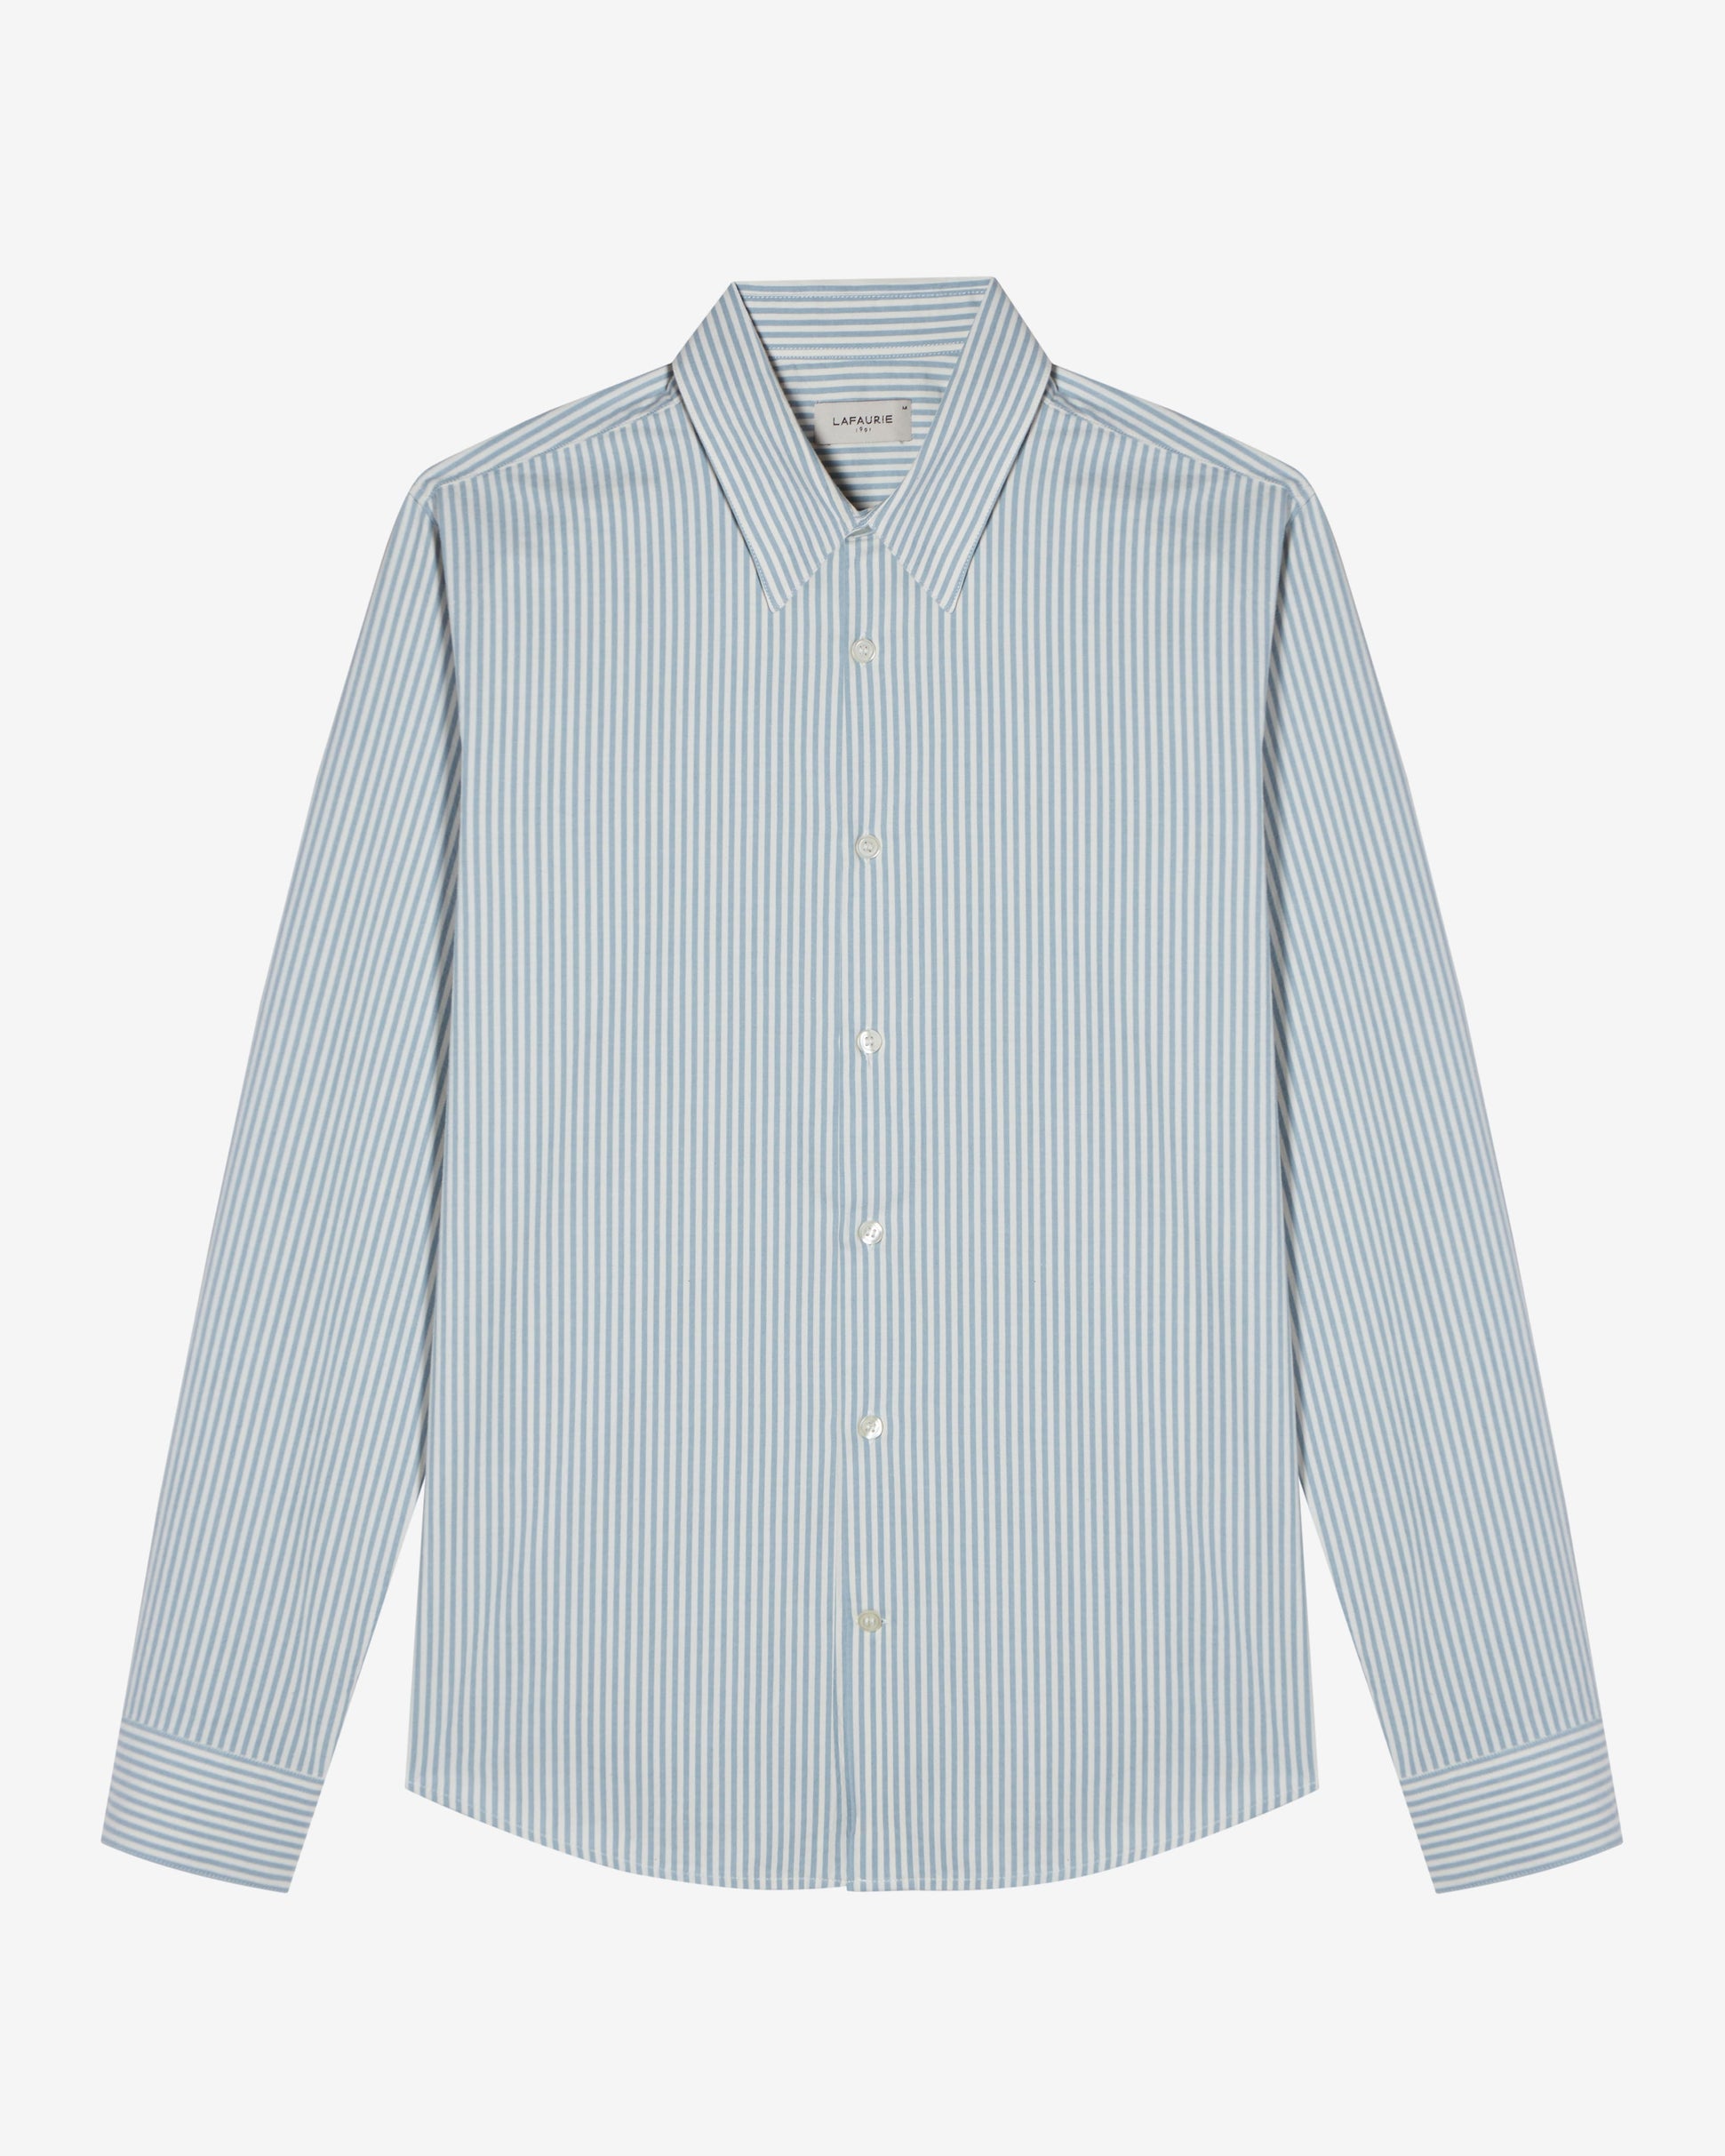 FARO Shirt - Turquoise/Ecru